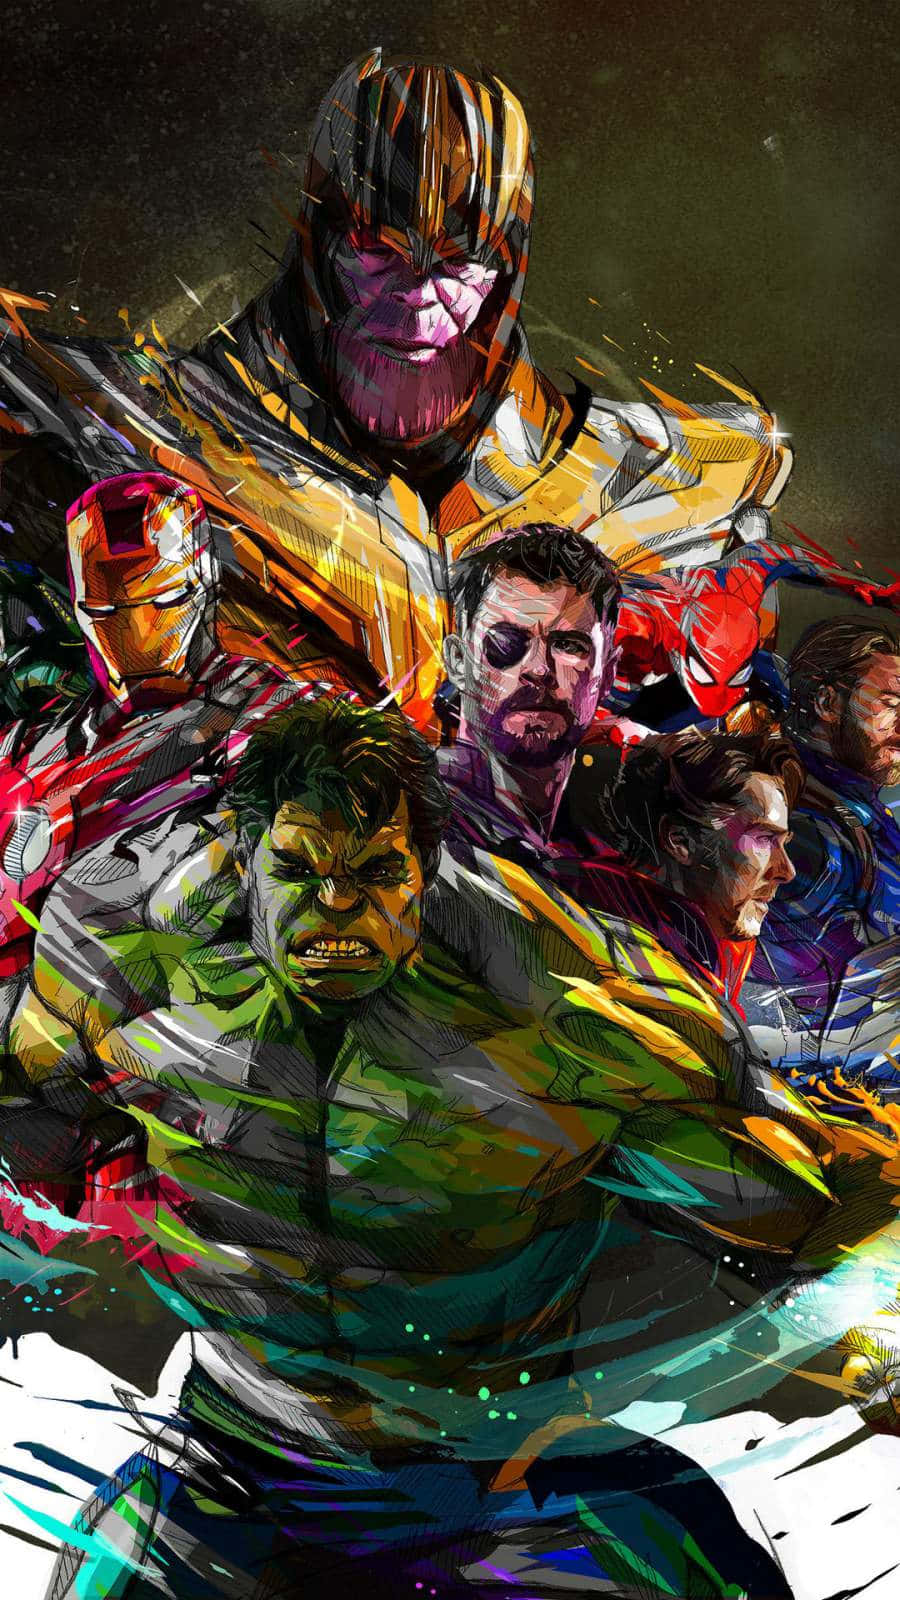 Avengersfilmaffischen. Wallpaper